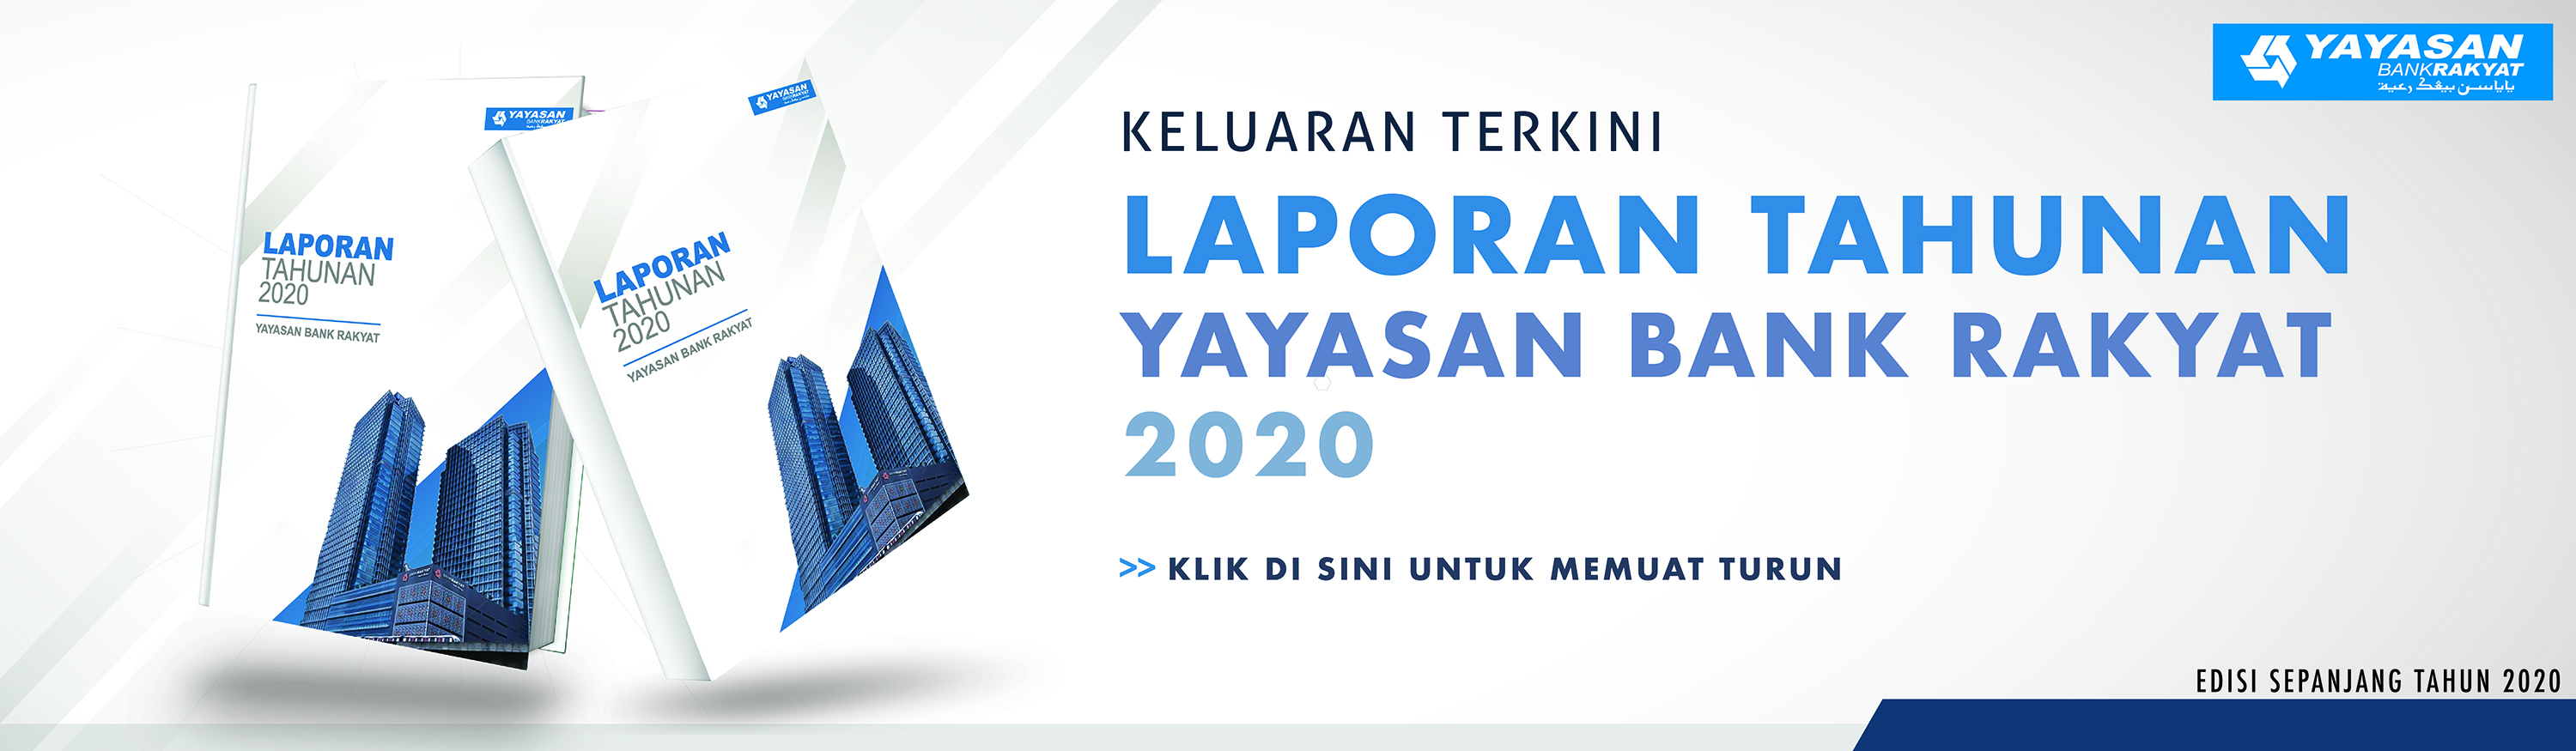 Yayasan bank rakyat scholarship 2021